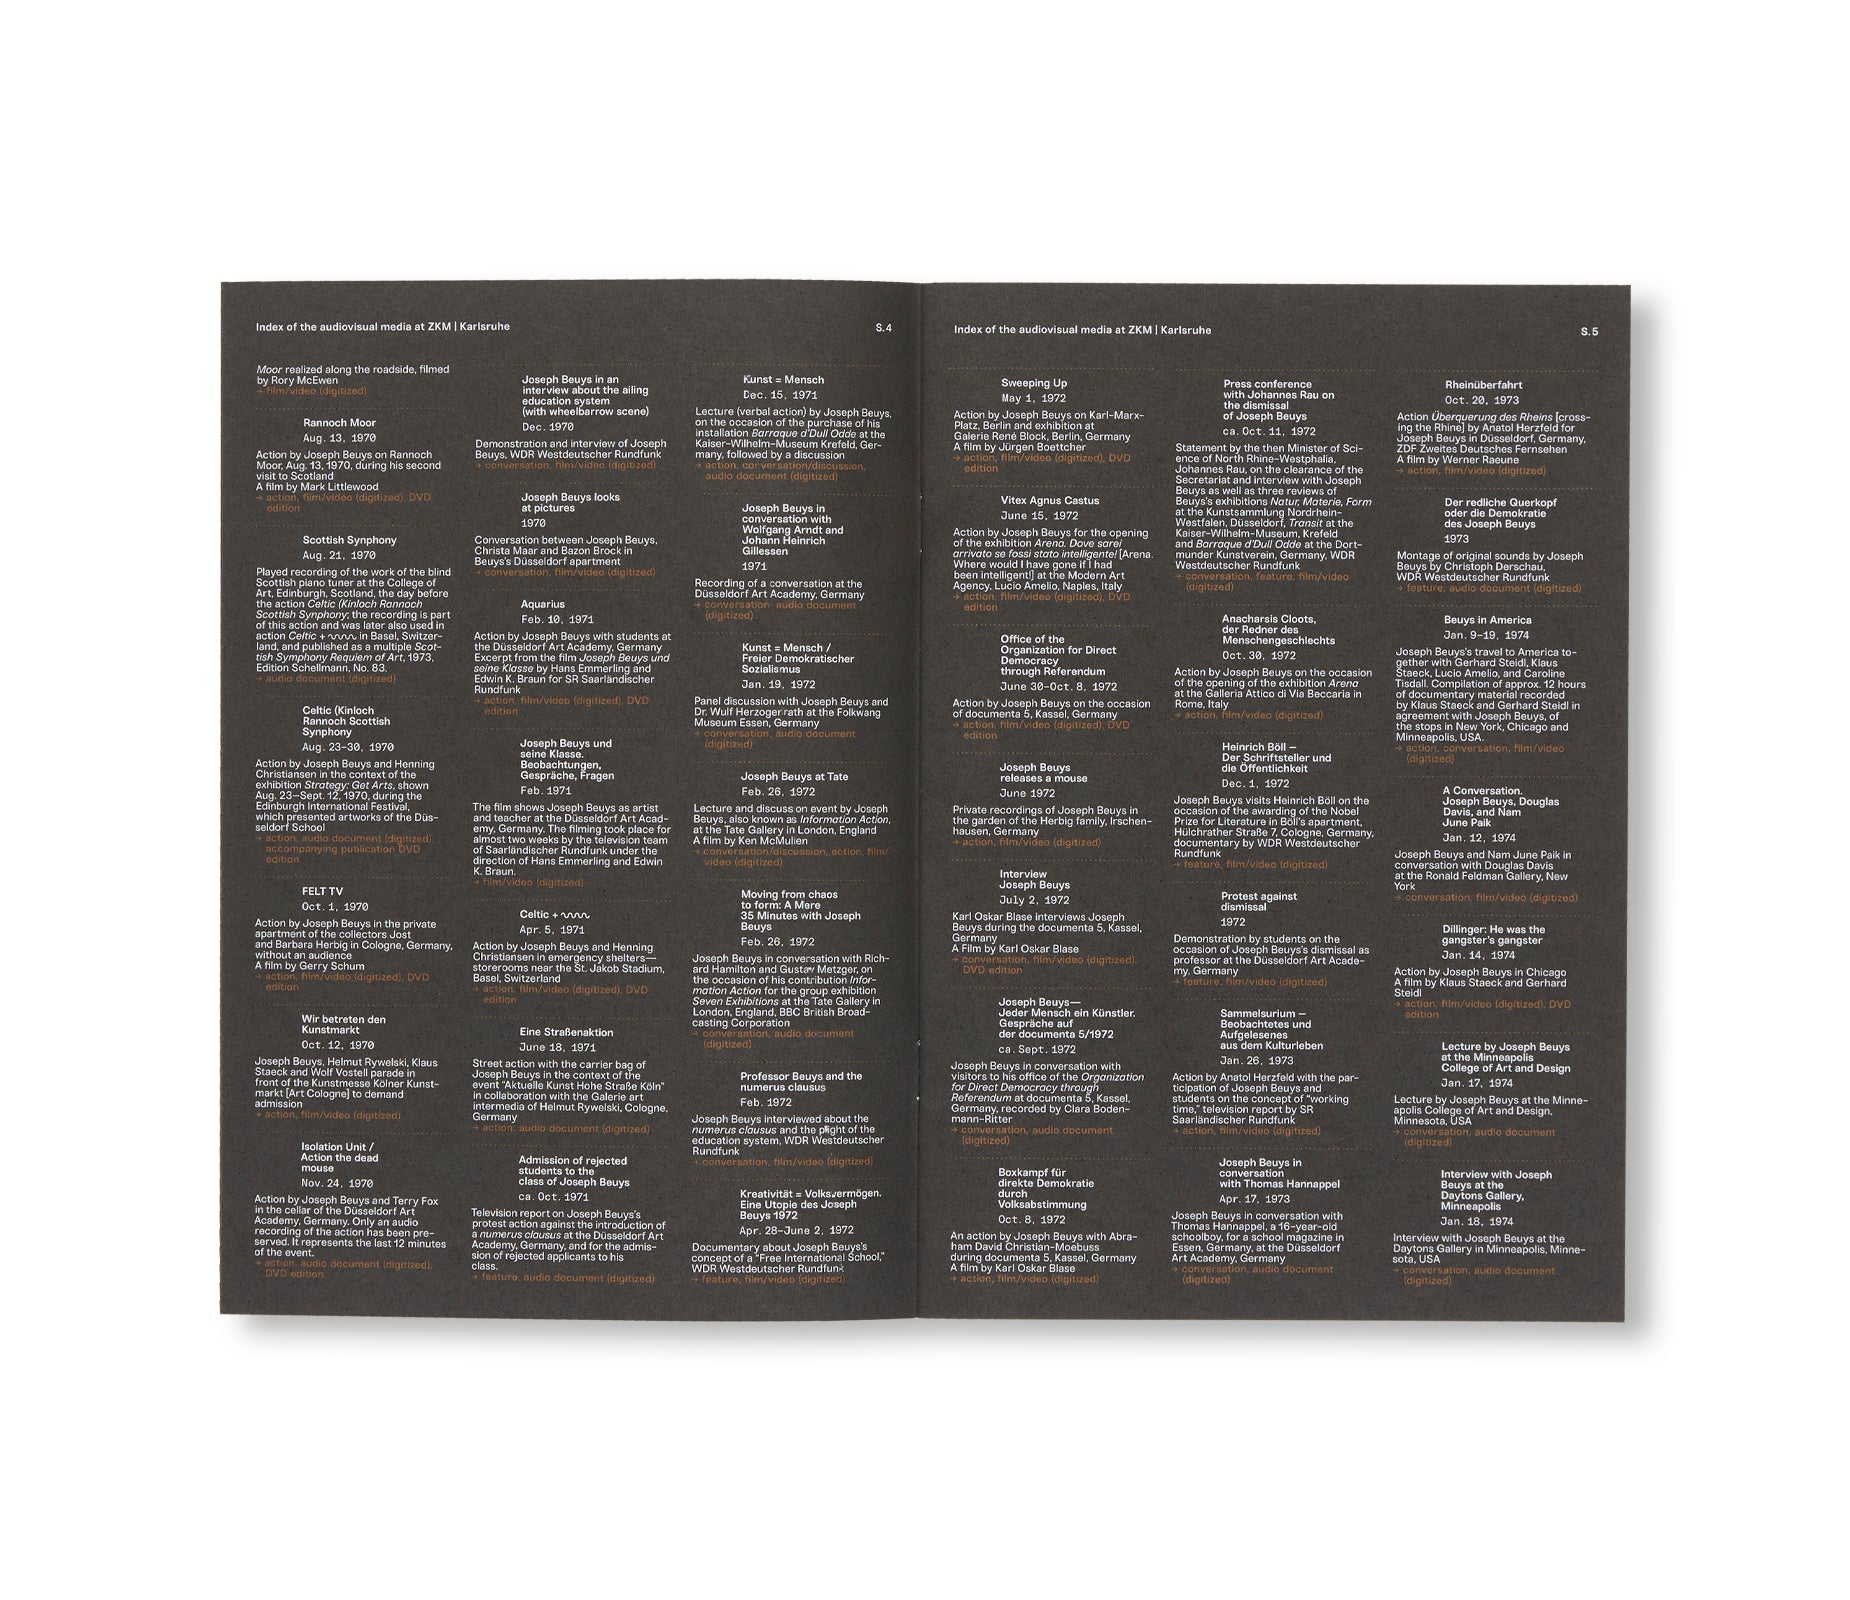 JOSEPH BEUYS: AKTIONEN 1963-1986 by Joseph Beuys